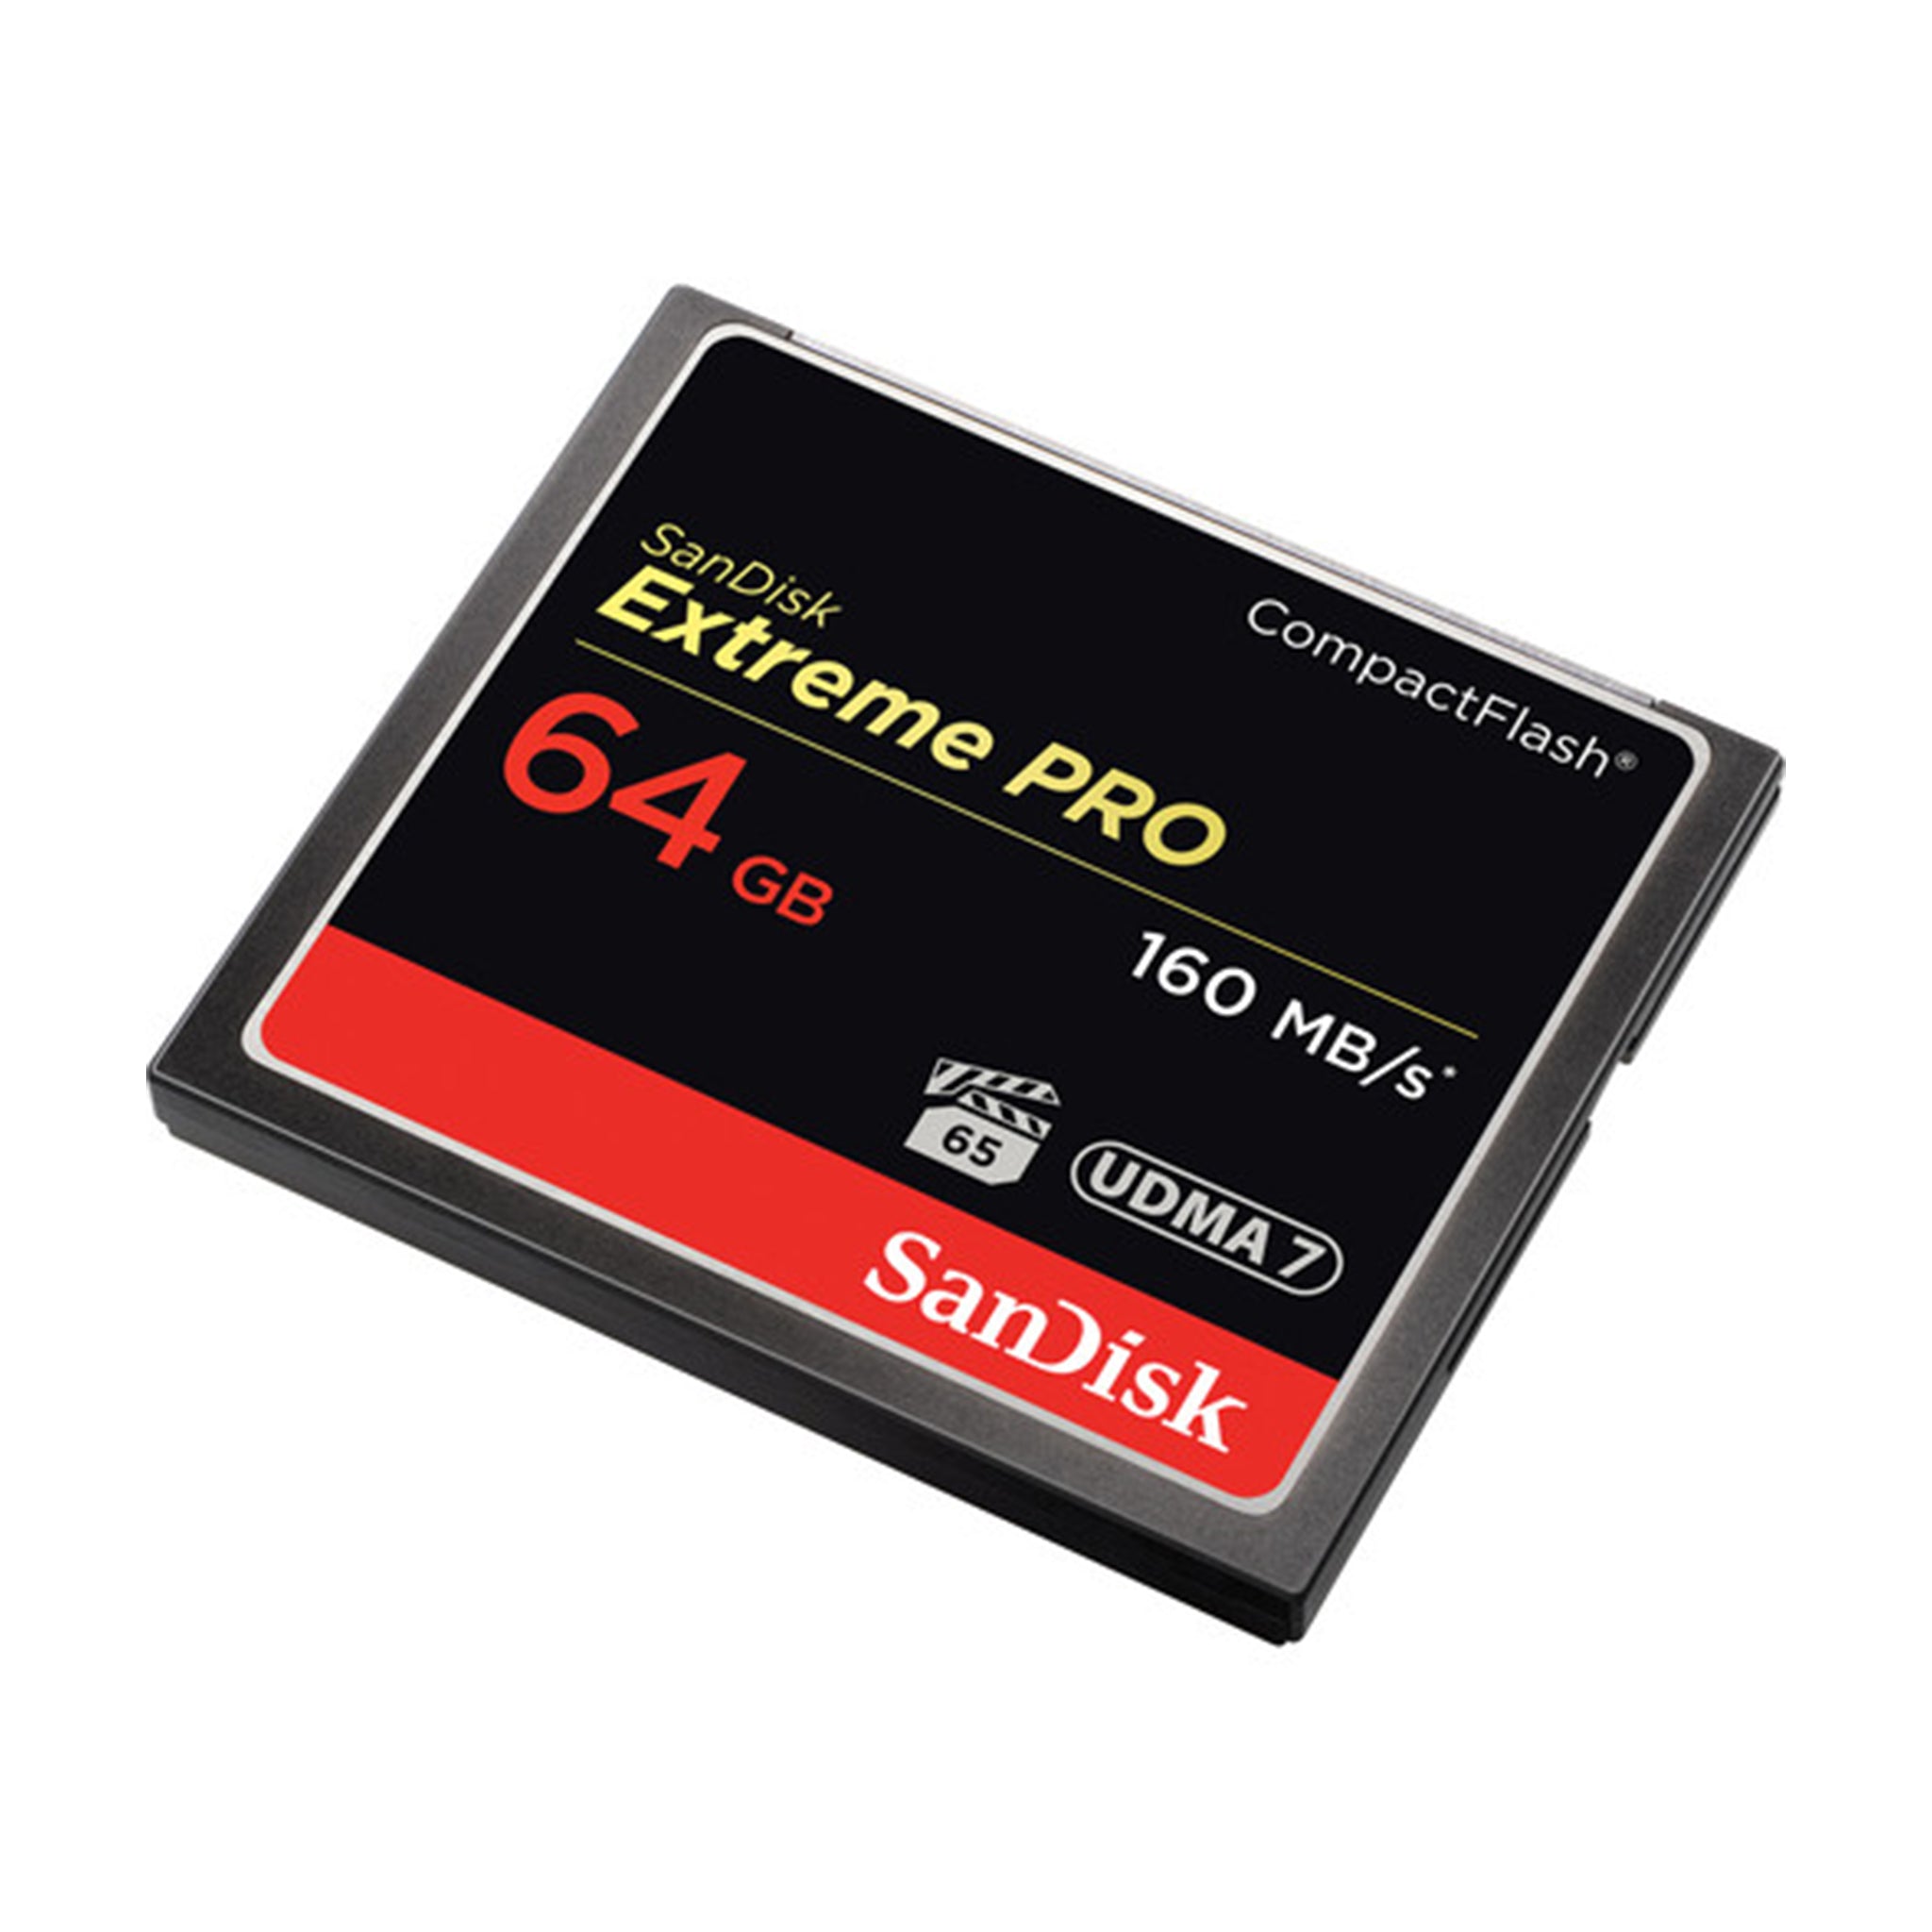 SanDisk 64GB Extreme Pro CF Card